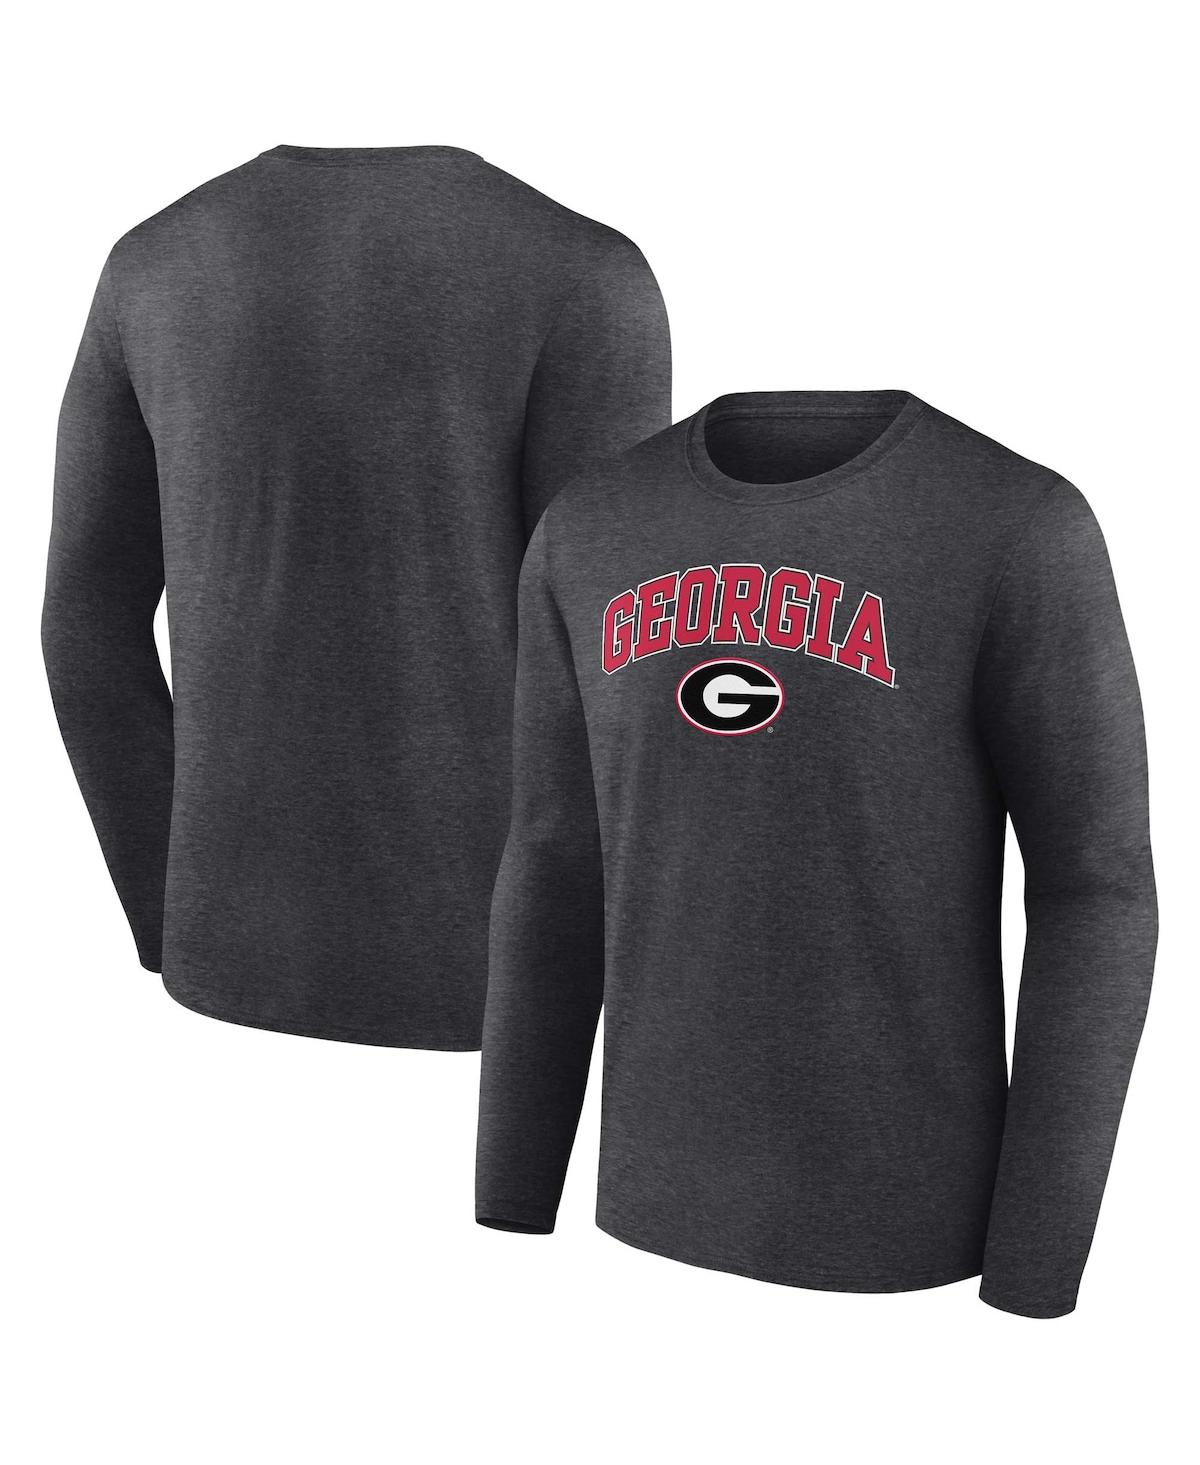 Fanatics Branded Men's Heather Gray Georgia Bulldogs Campus Long Sleeve T-shirt In Heather Charcoal